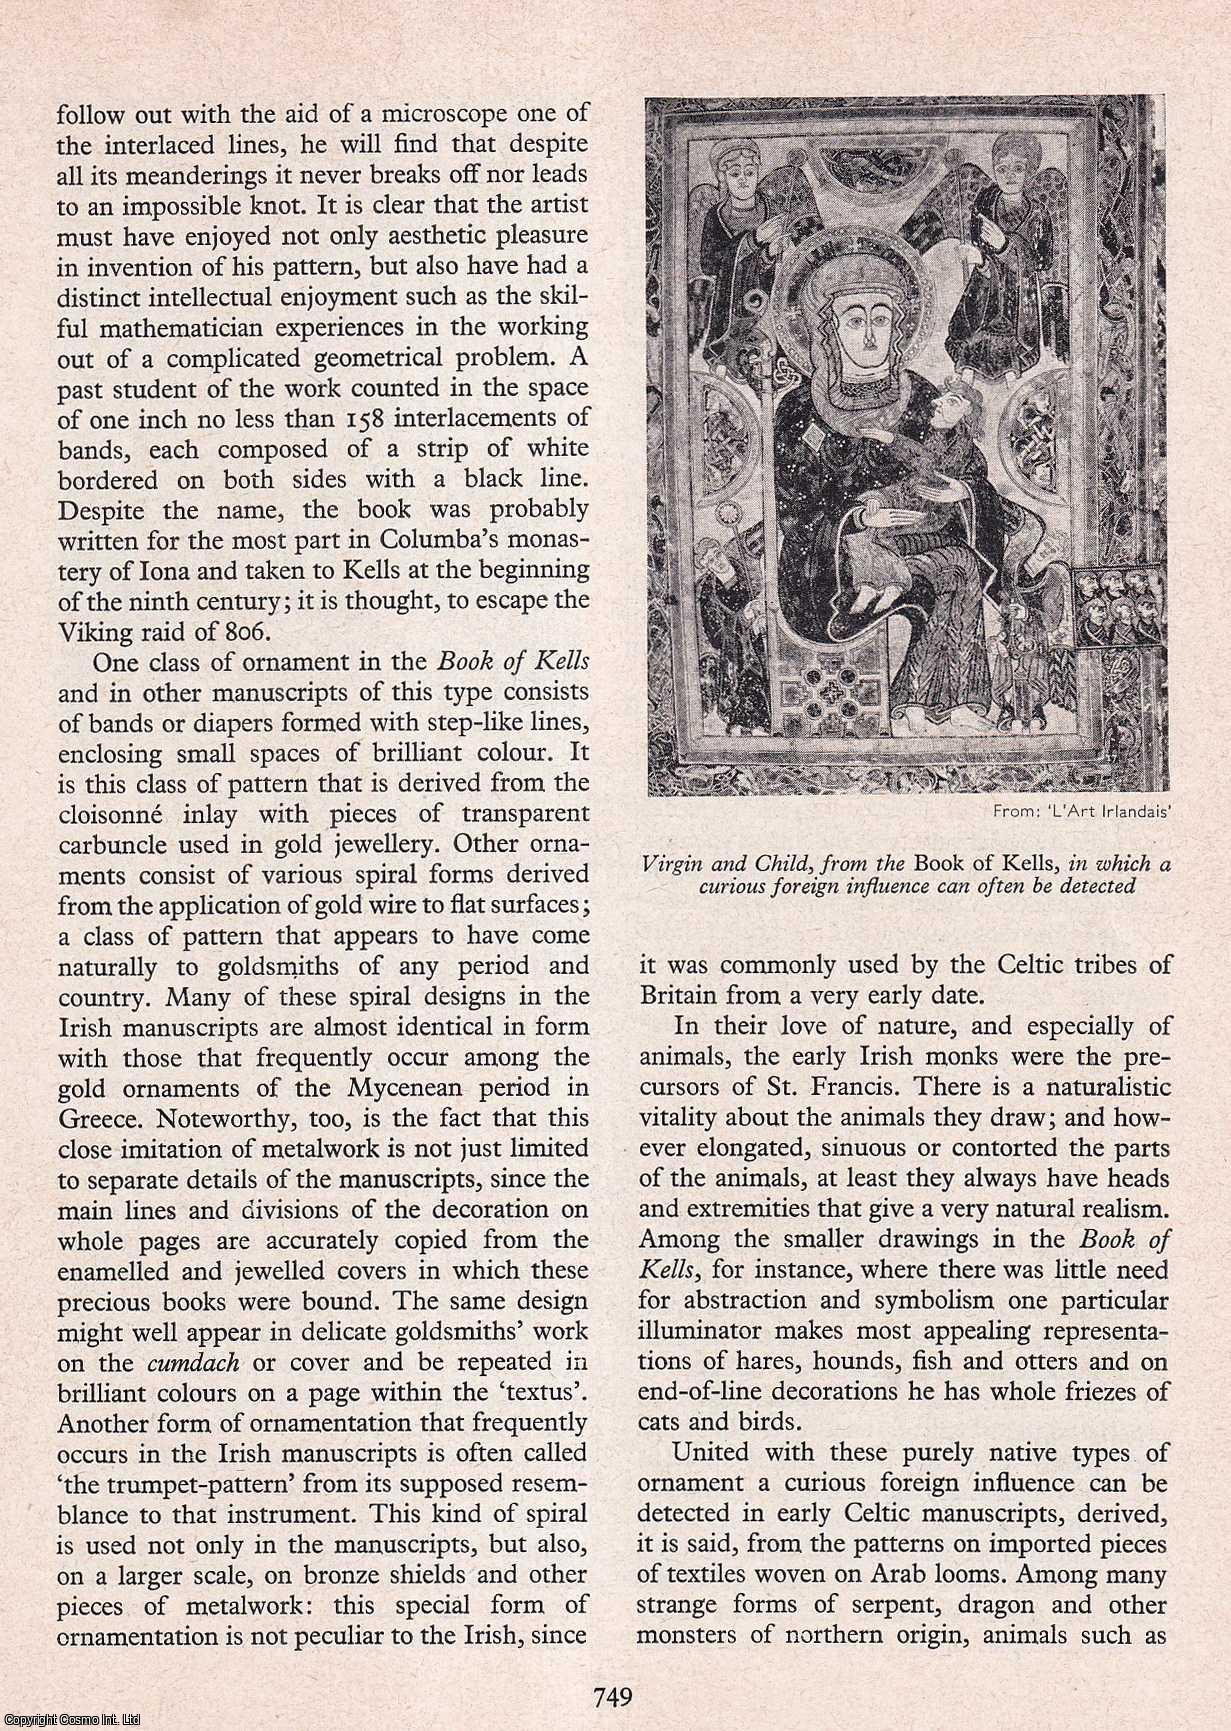 J.J.N. McGurk - The Celtic School of Manuscript Illumination. An original article from History Today magazine, 1966.